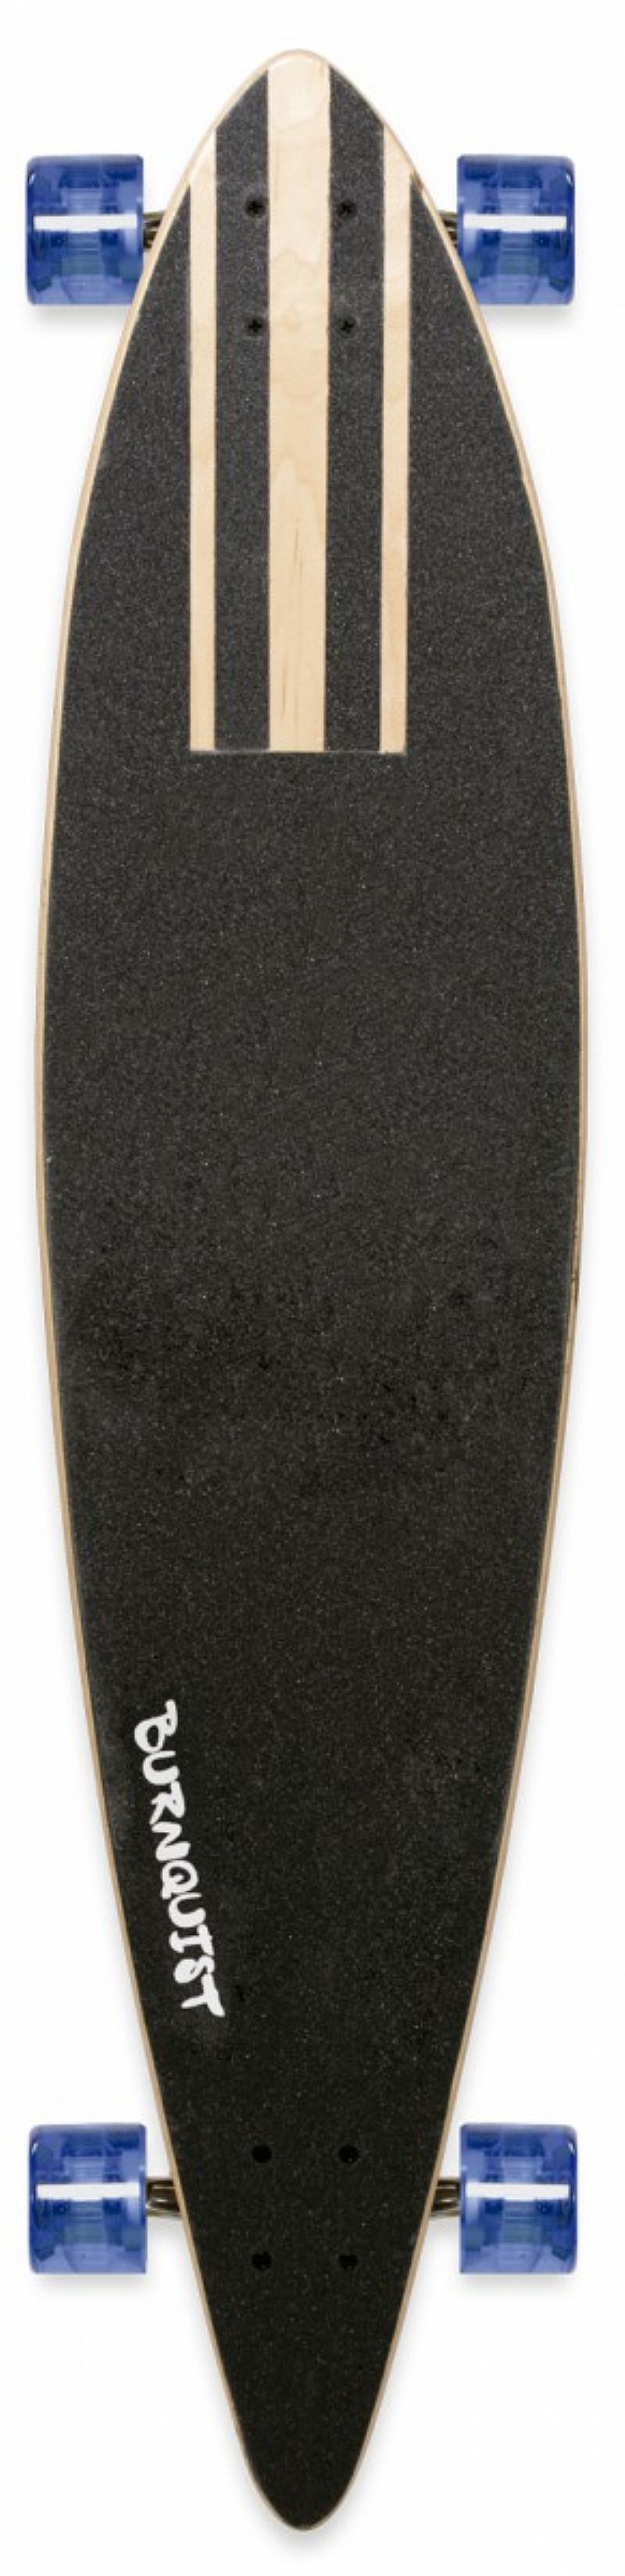 Skate longboard bob burnquist 46pol azul